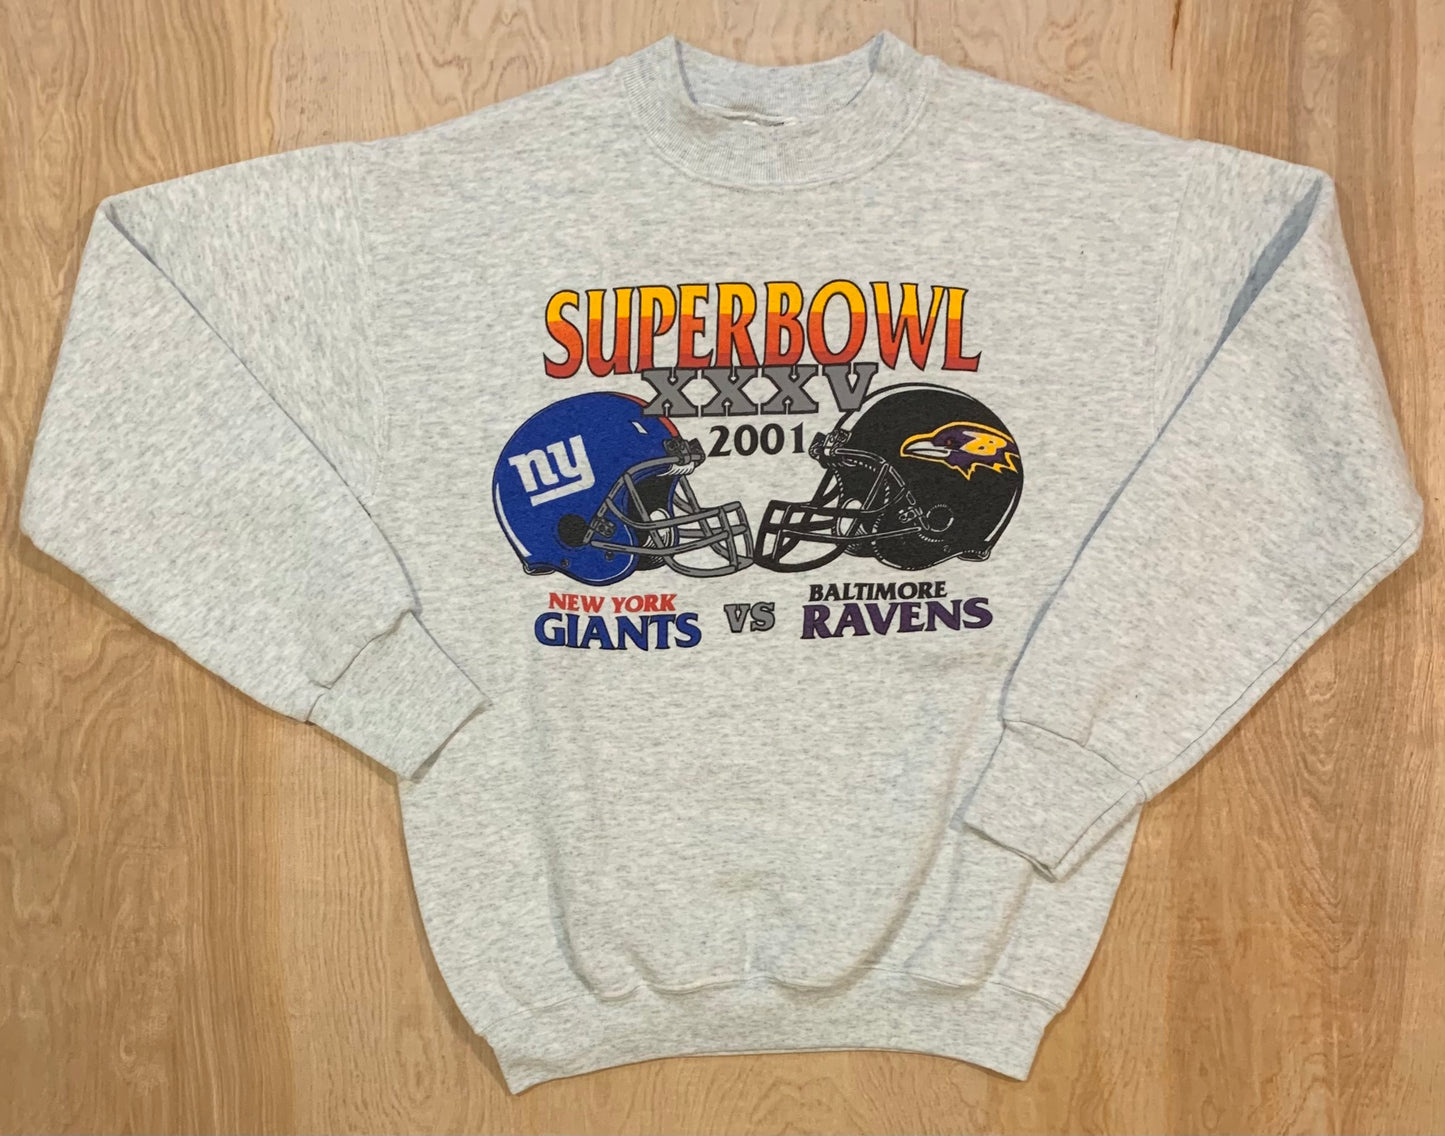 Vintage 2001 Super Bowl XXXV Giants vs. Ravens Crewneck